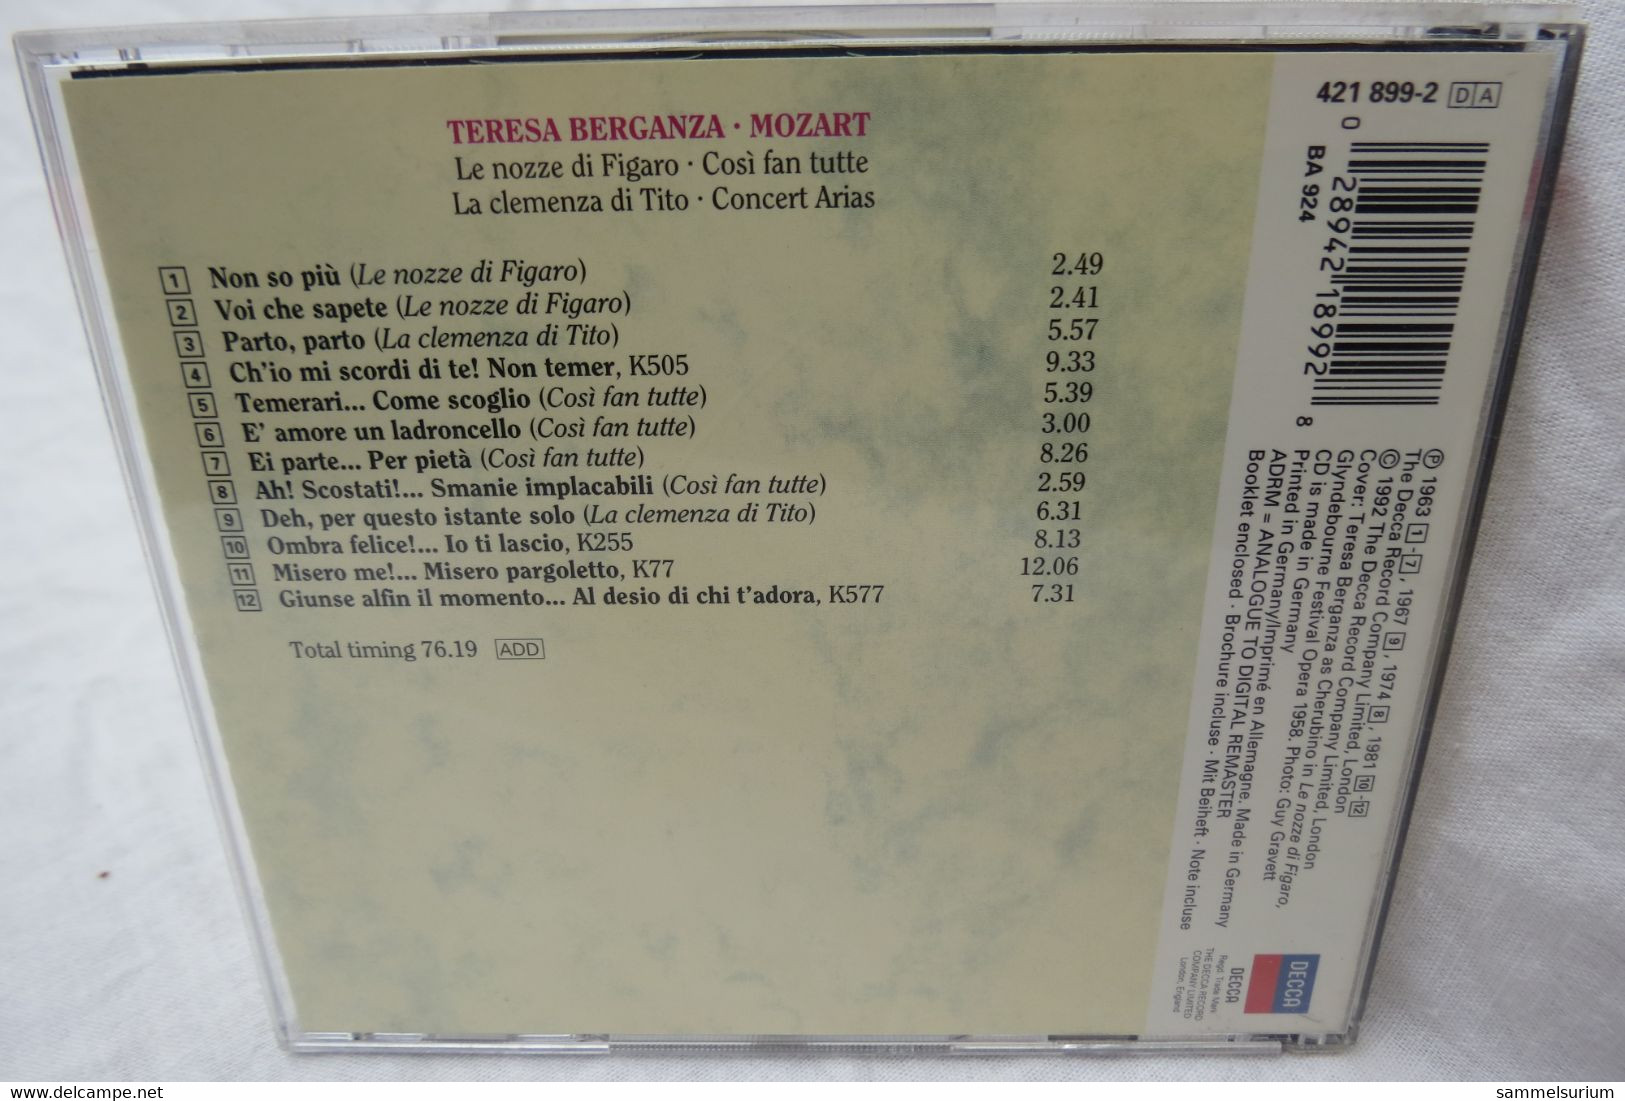 CD "Teresa Berganza" Mozart, Opern Gala - Opera / Operette